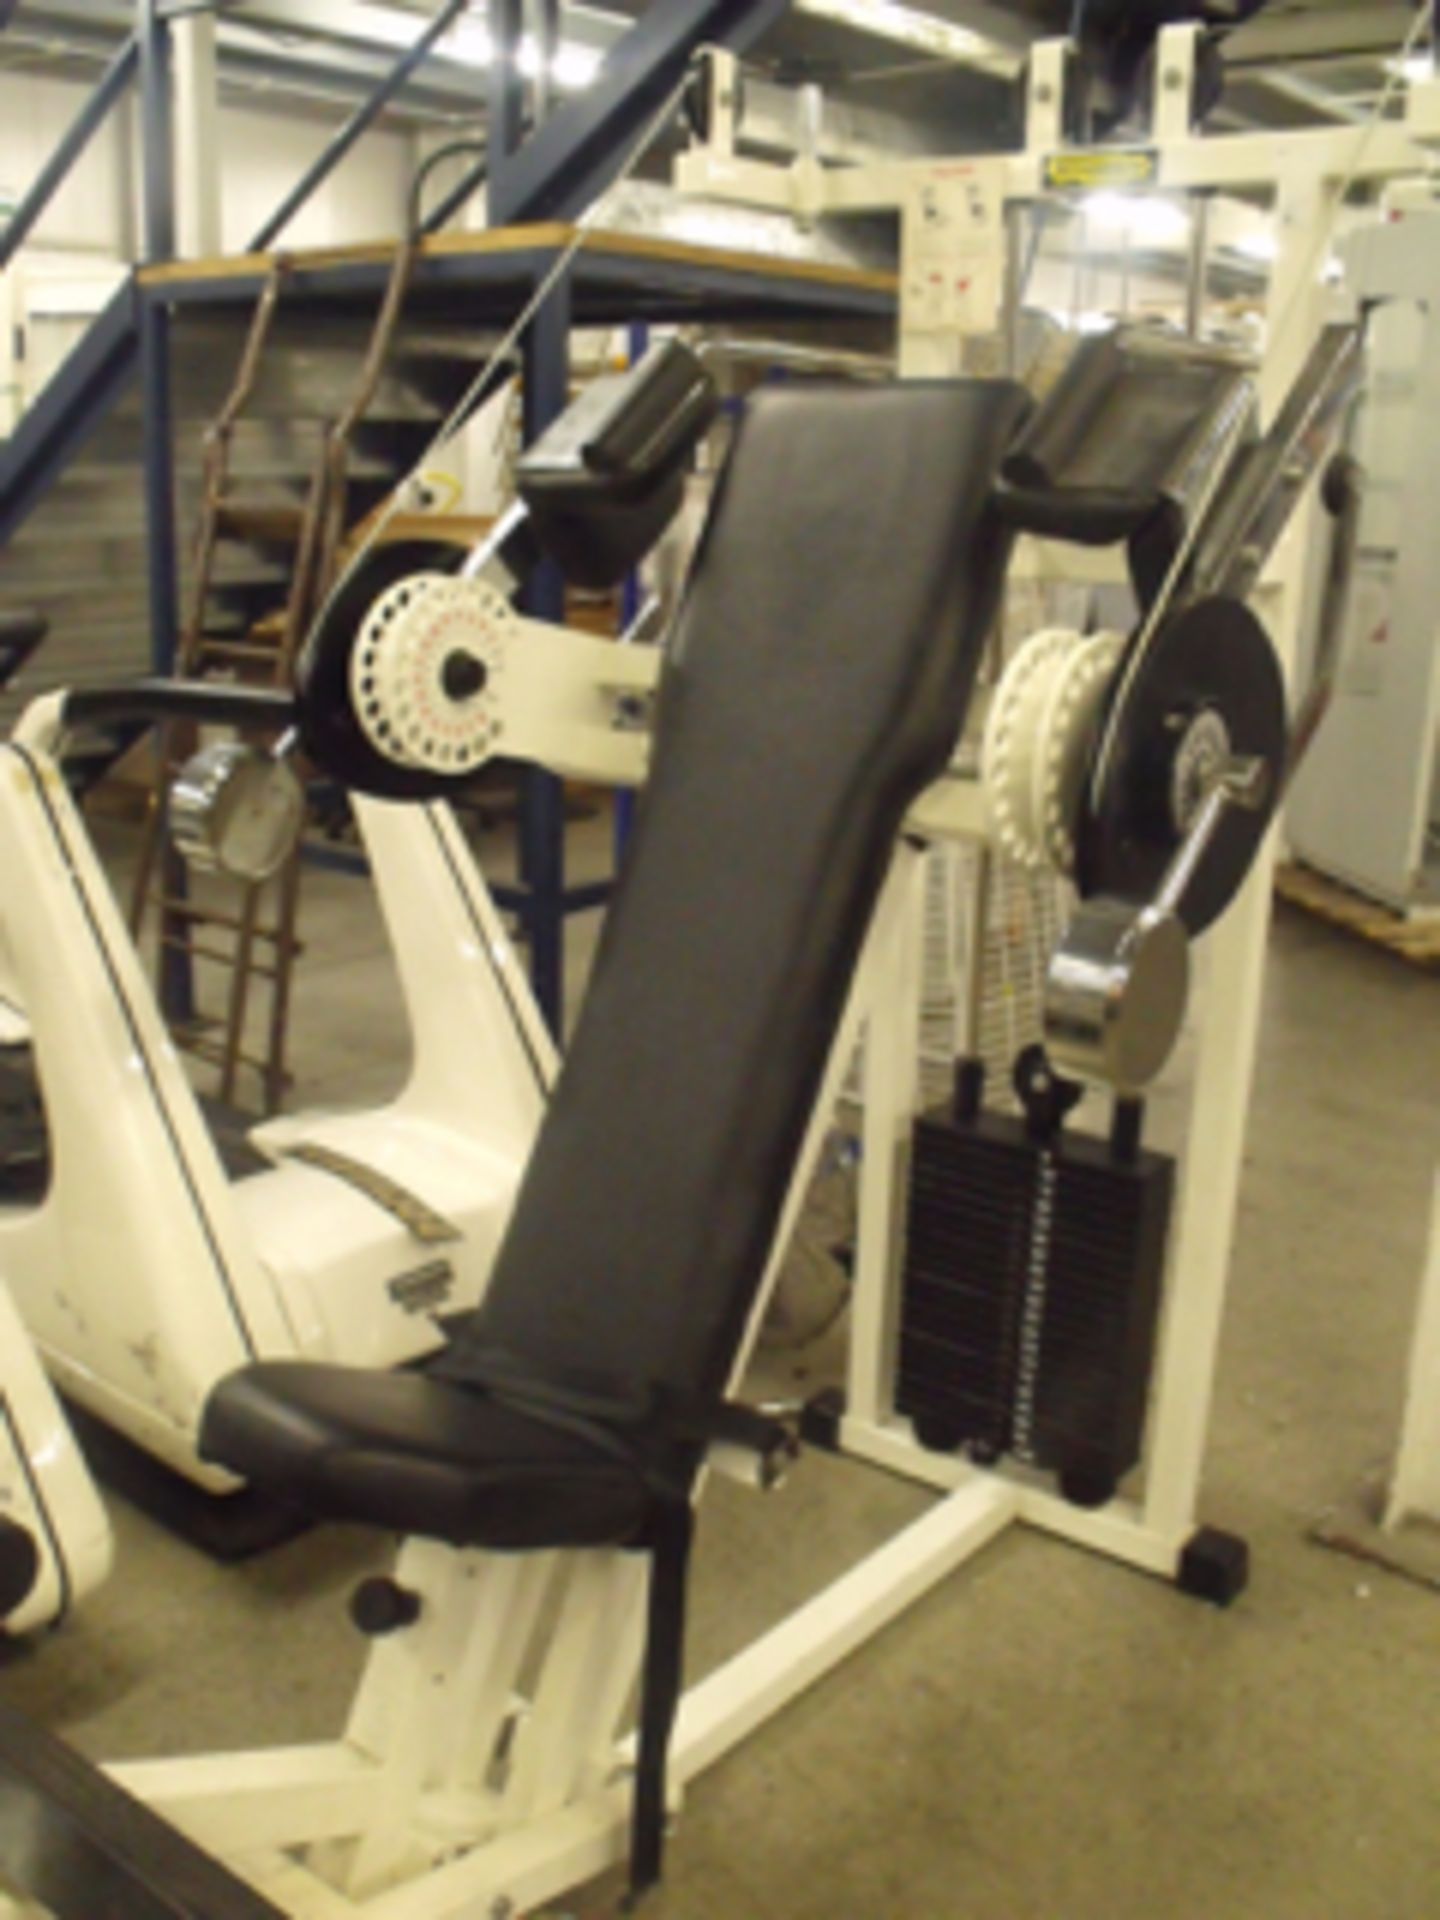 techno gym pullover machine with 100kg weight set